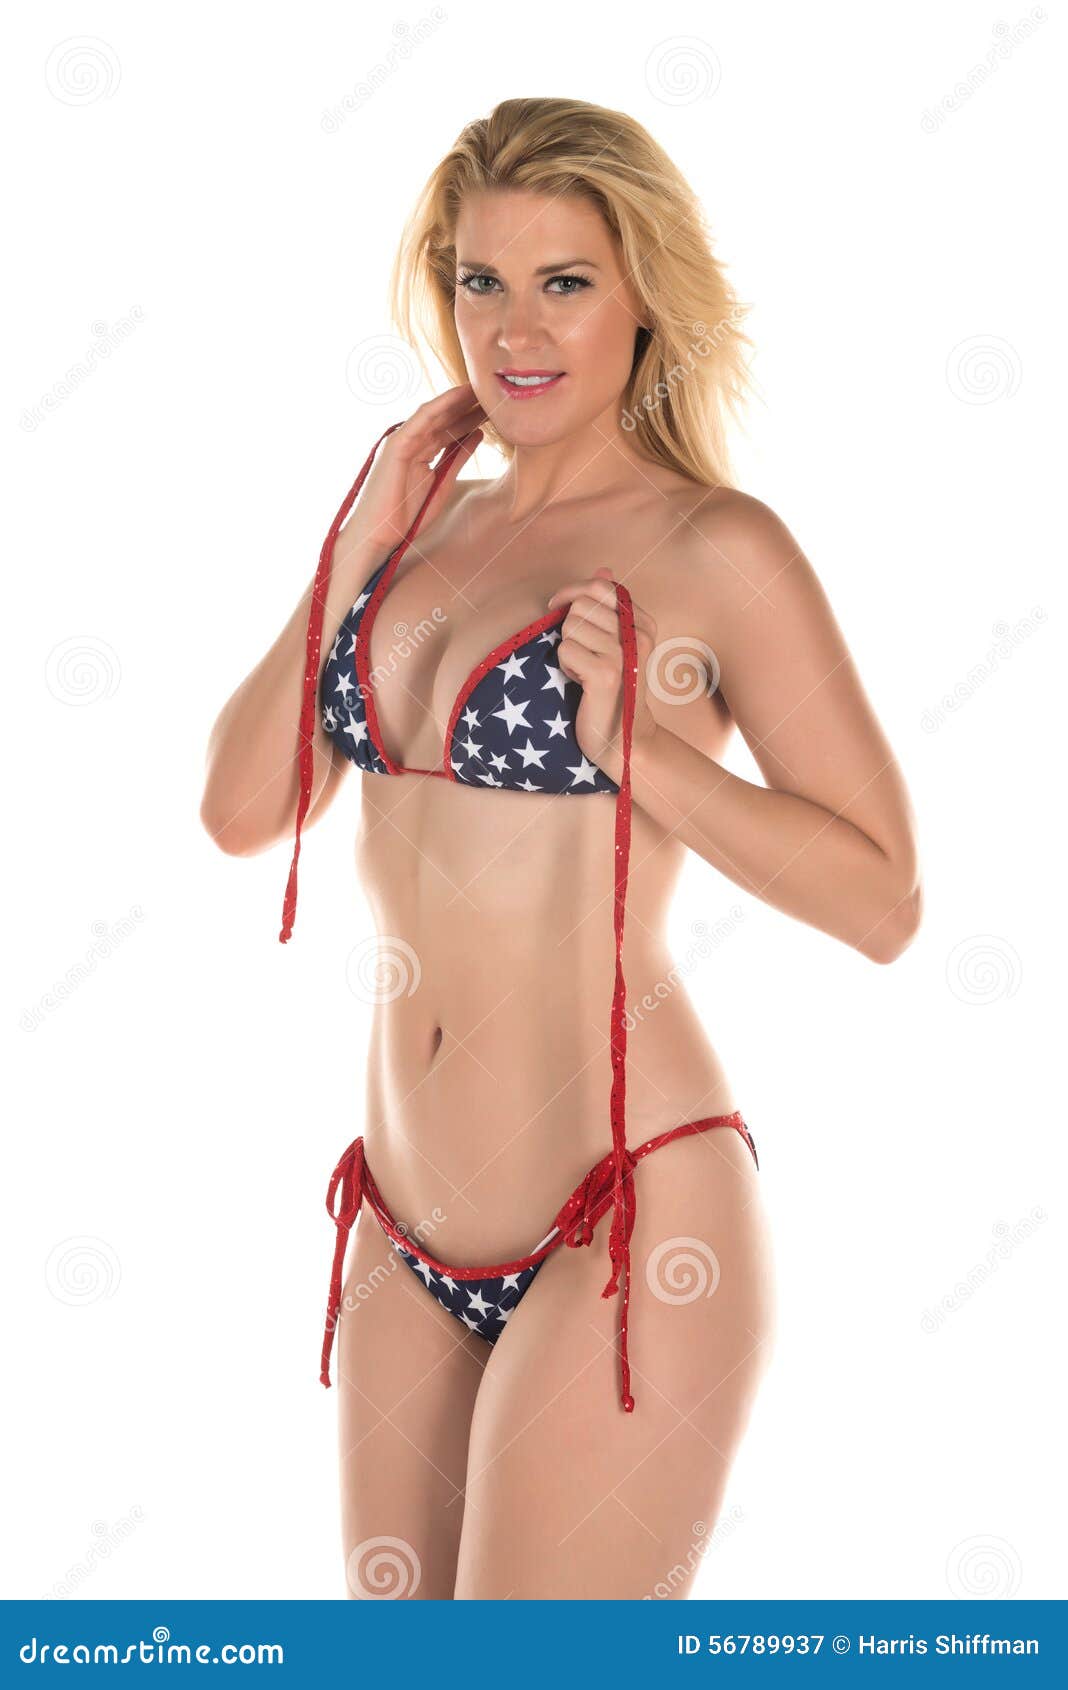 bikini clad woman selfie